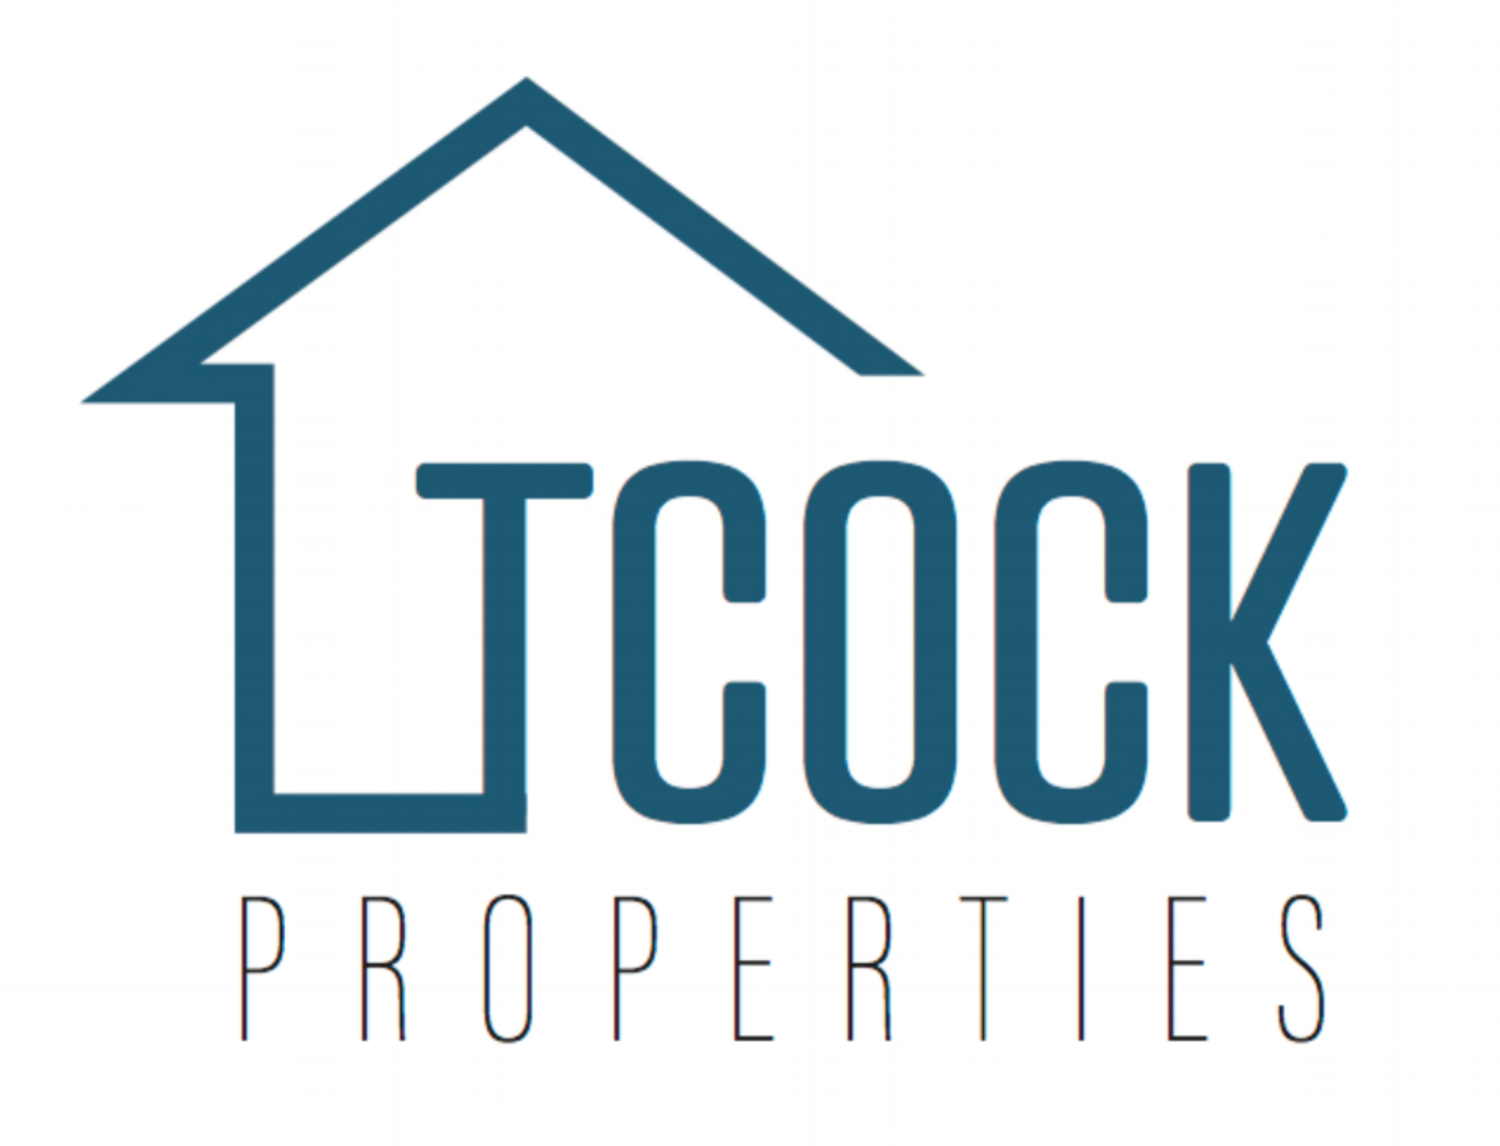 TCOCK Property Management